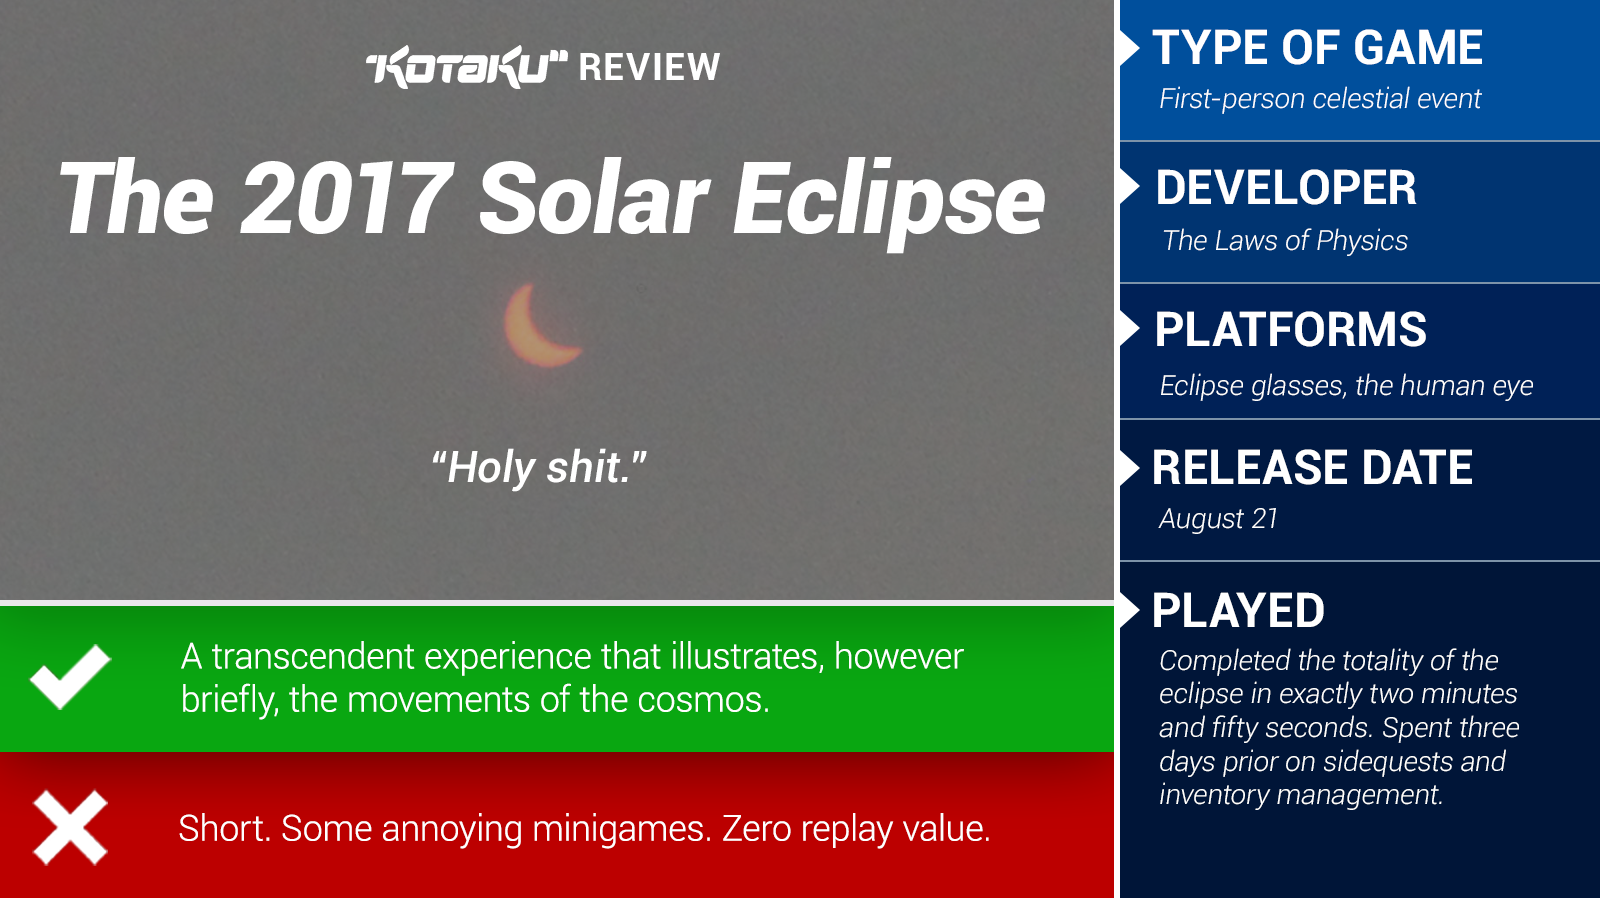 The 2017 Solar Eclipse: The Kotaku Review